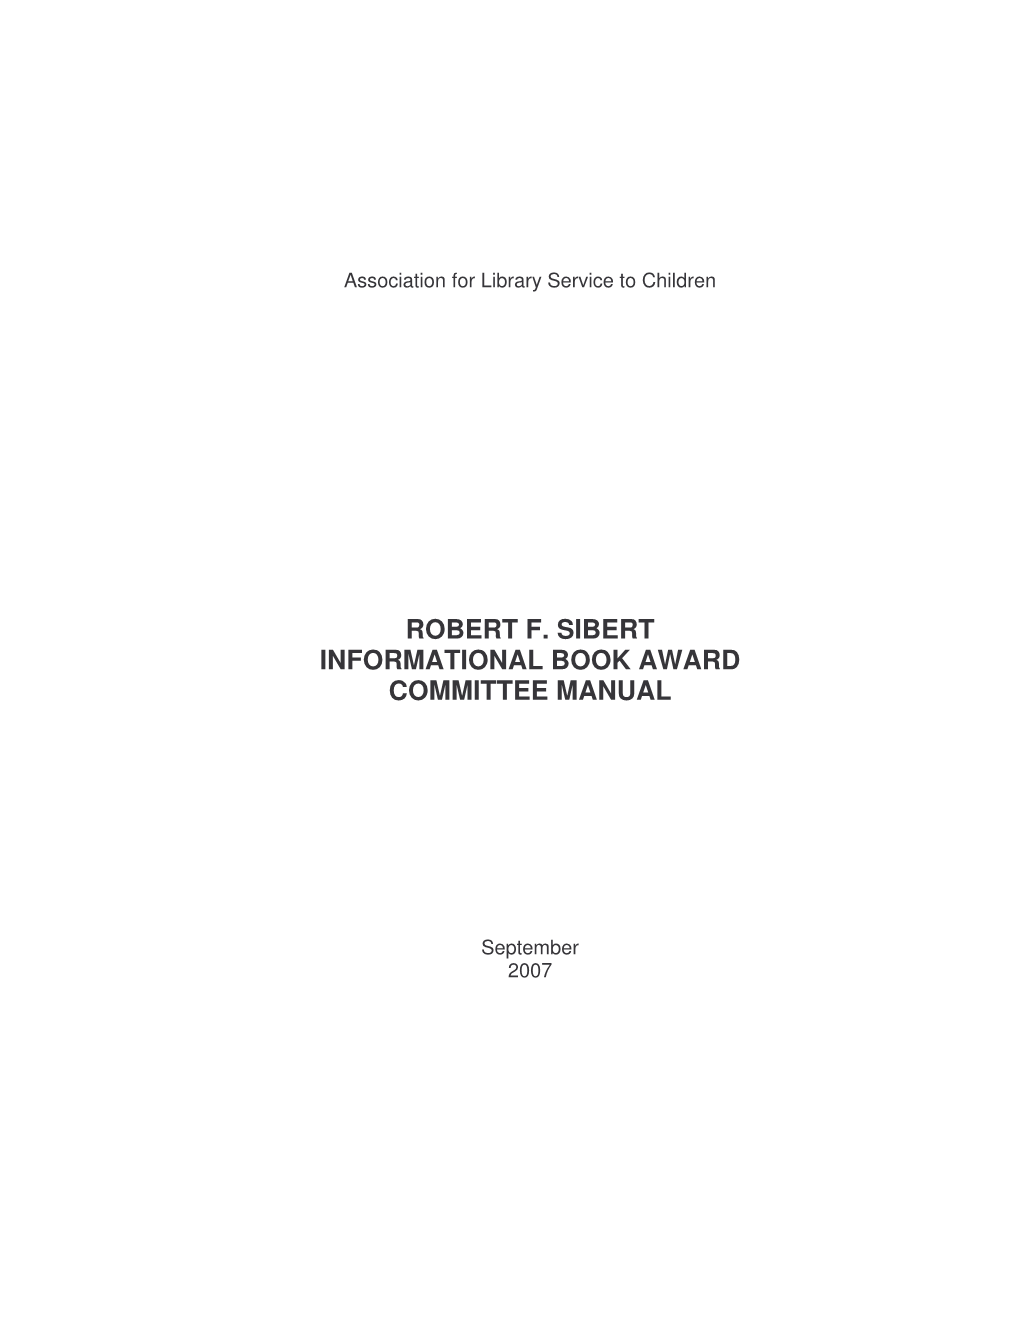 Robert F. Sibert Informational Book Award Committee Manual